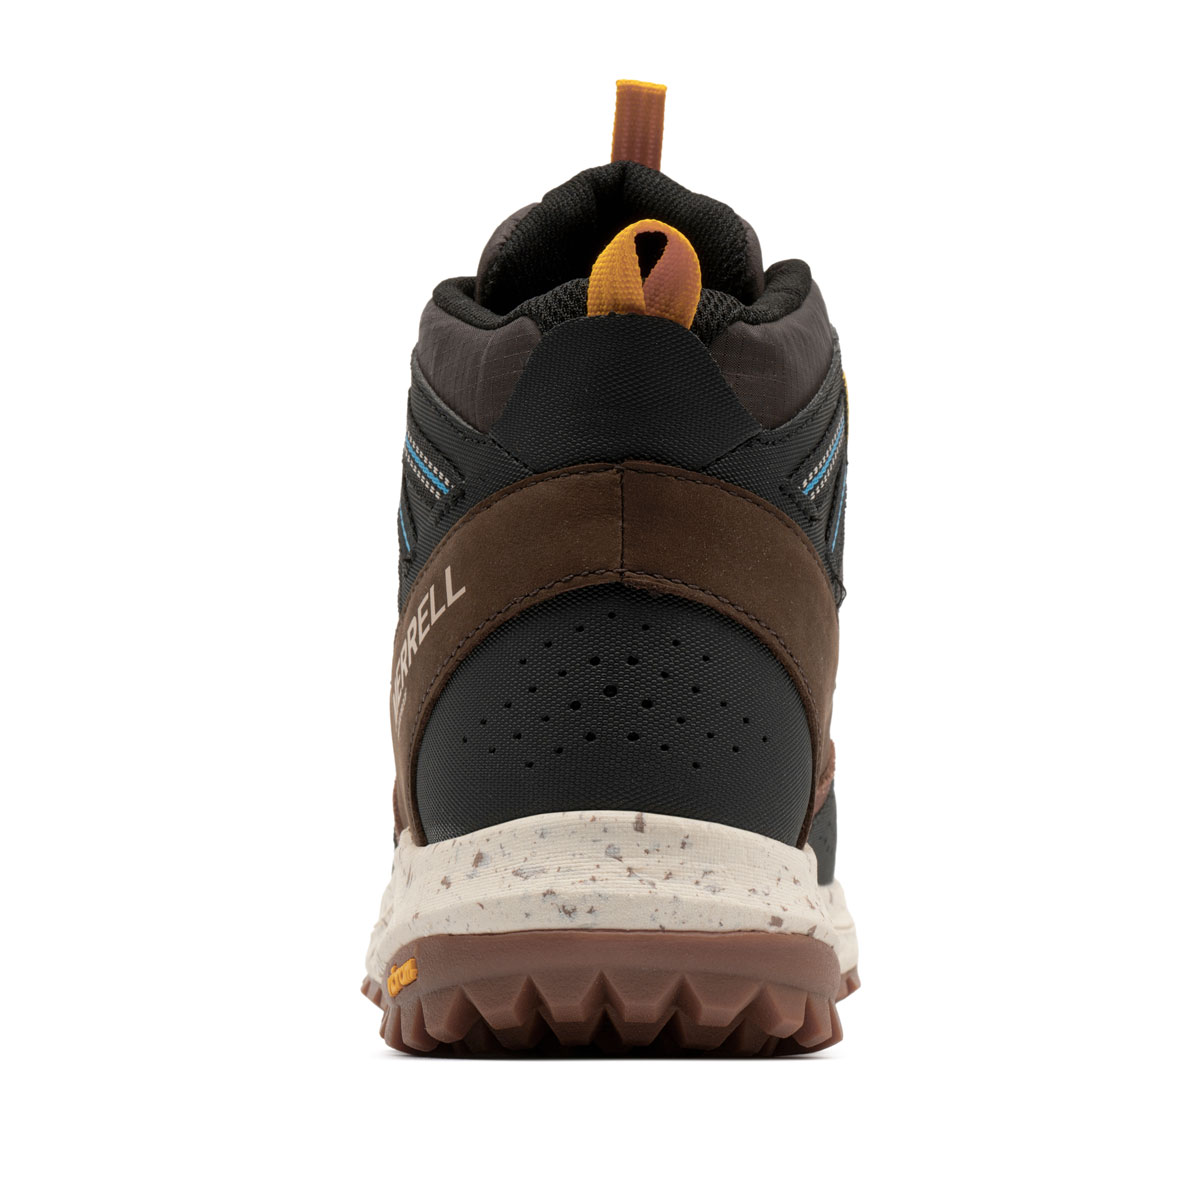 Merrell Nova Sneaker Boot Bungee WaterProof Мъжки зимни обувки J067111